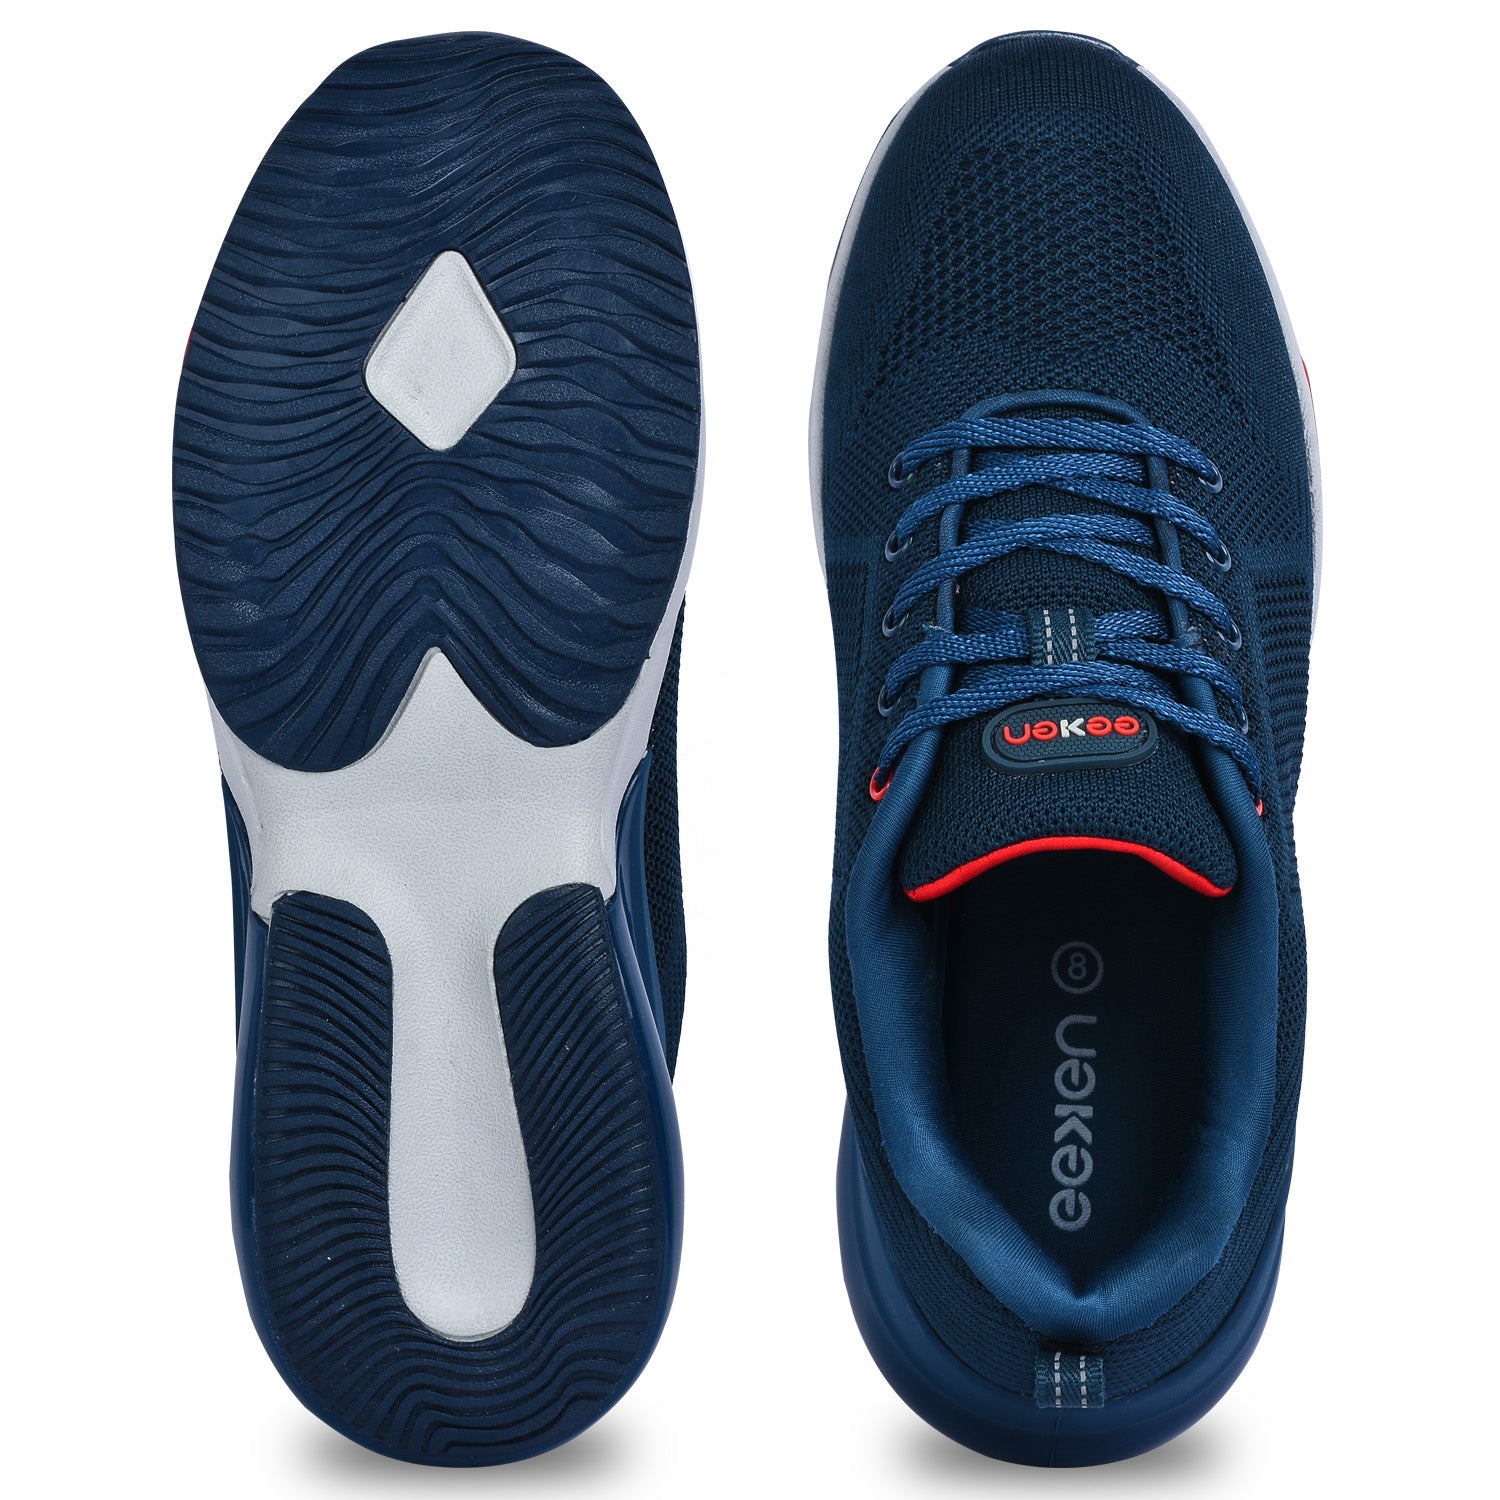 Eeken Teal Blue Athleisure Shoes for Men